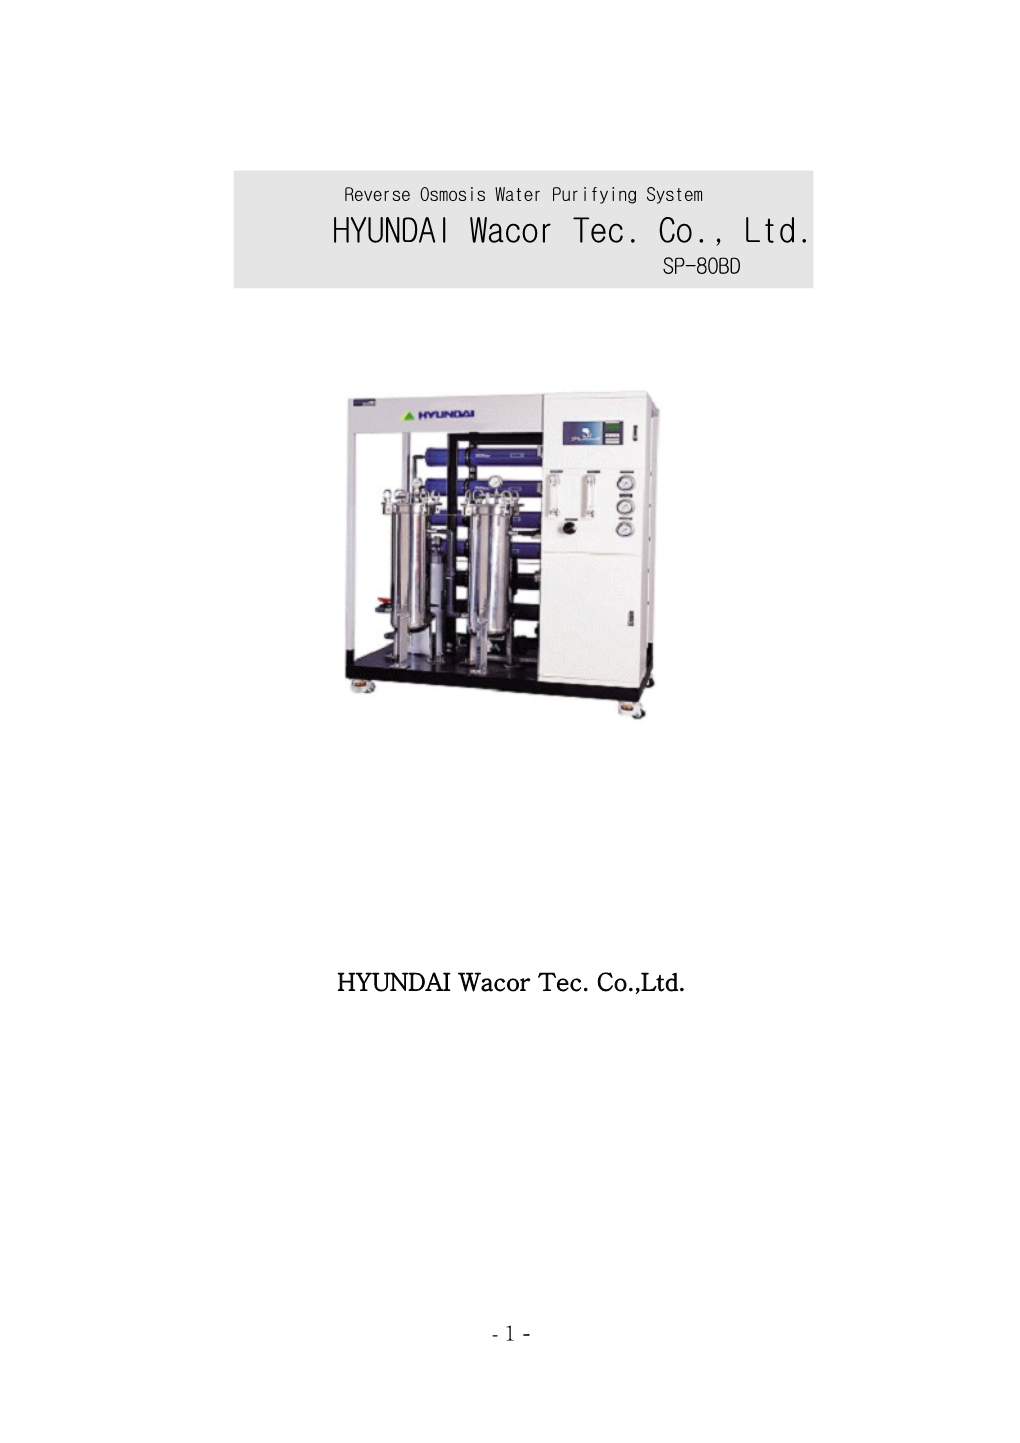 HYUNDAI Wacor Tec. Co.,Ltd